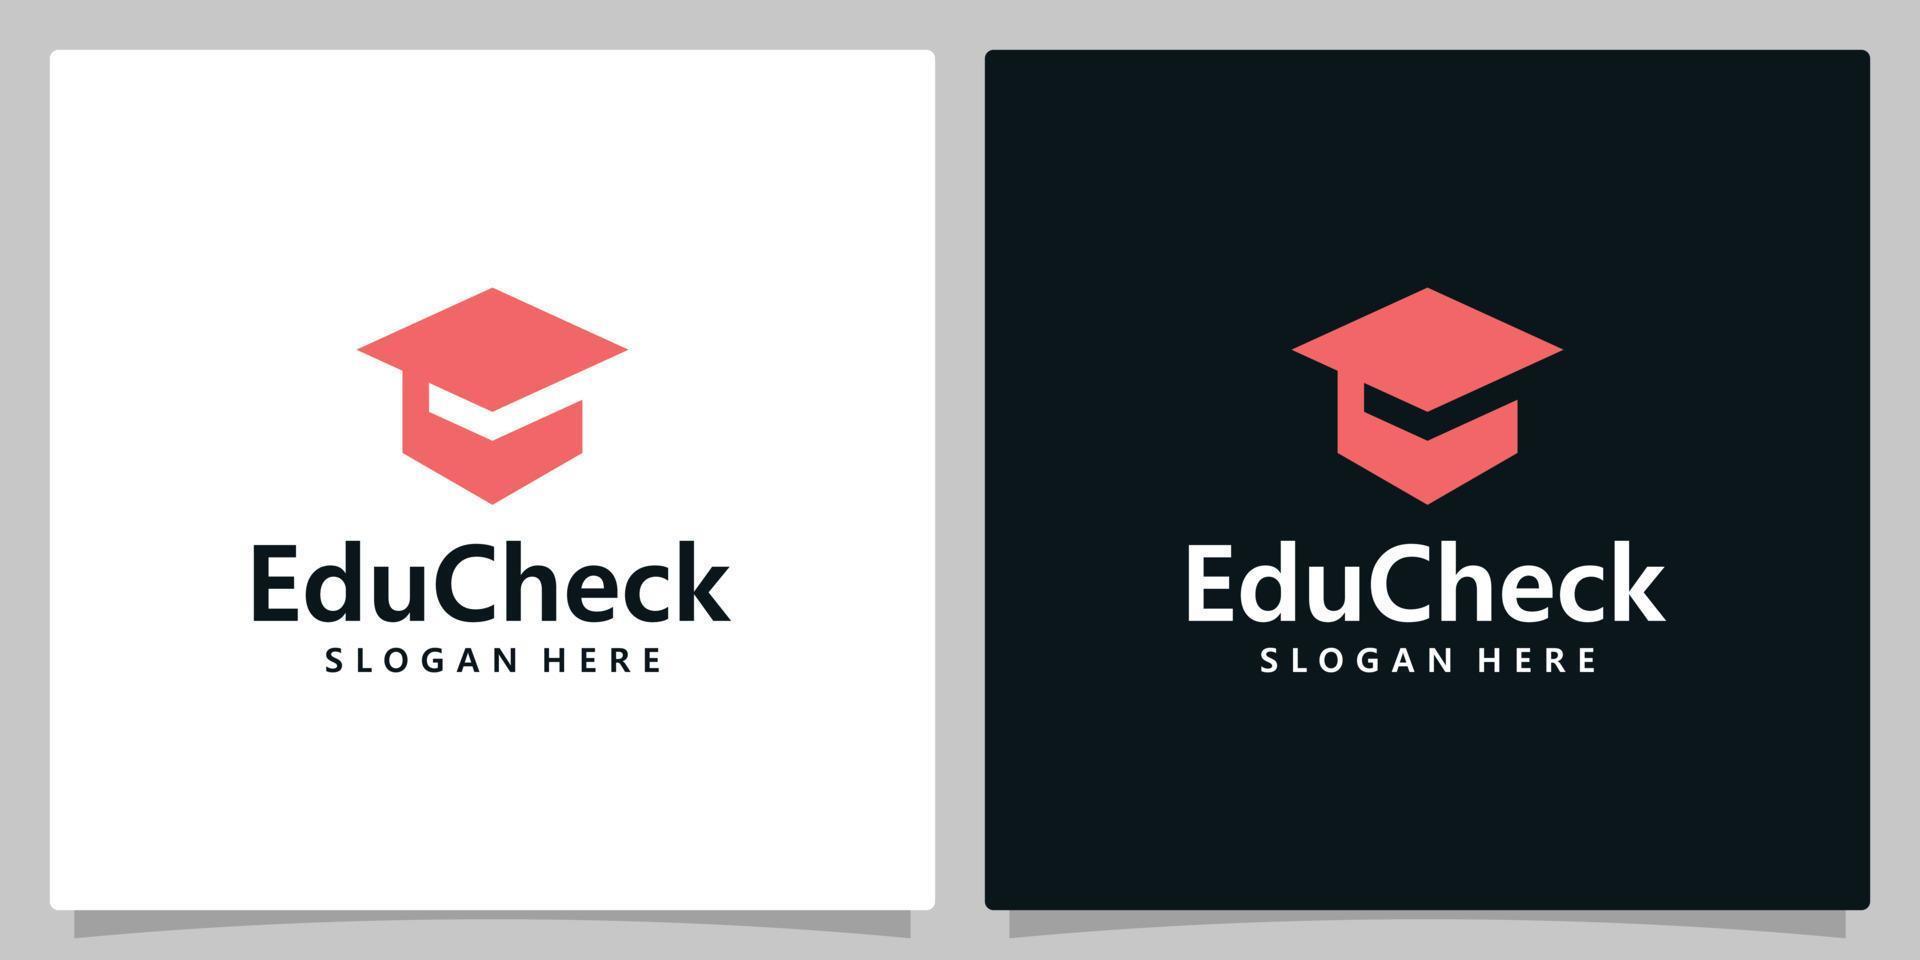 College, Graduate, Campus, Education logo design. and check mark logo. vector